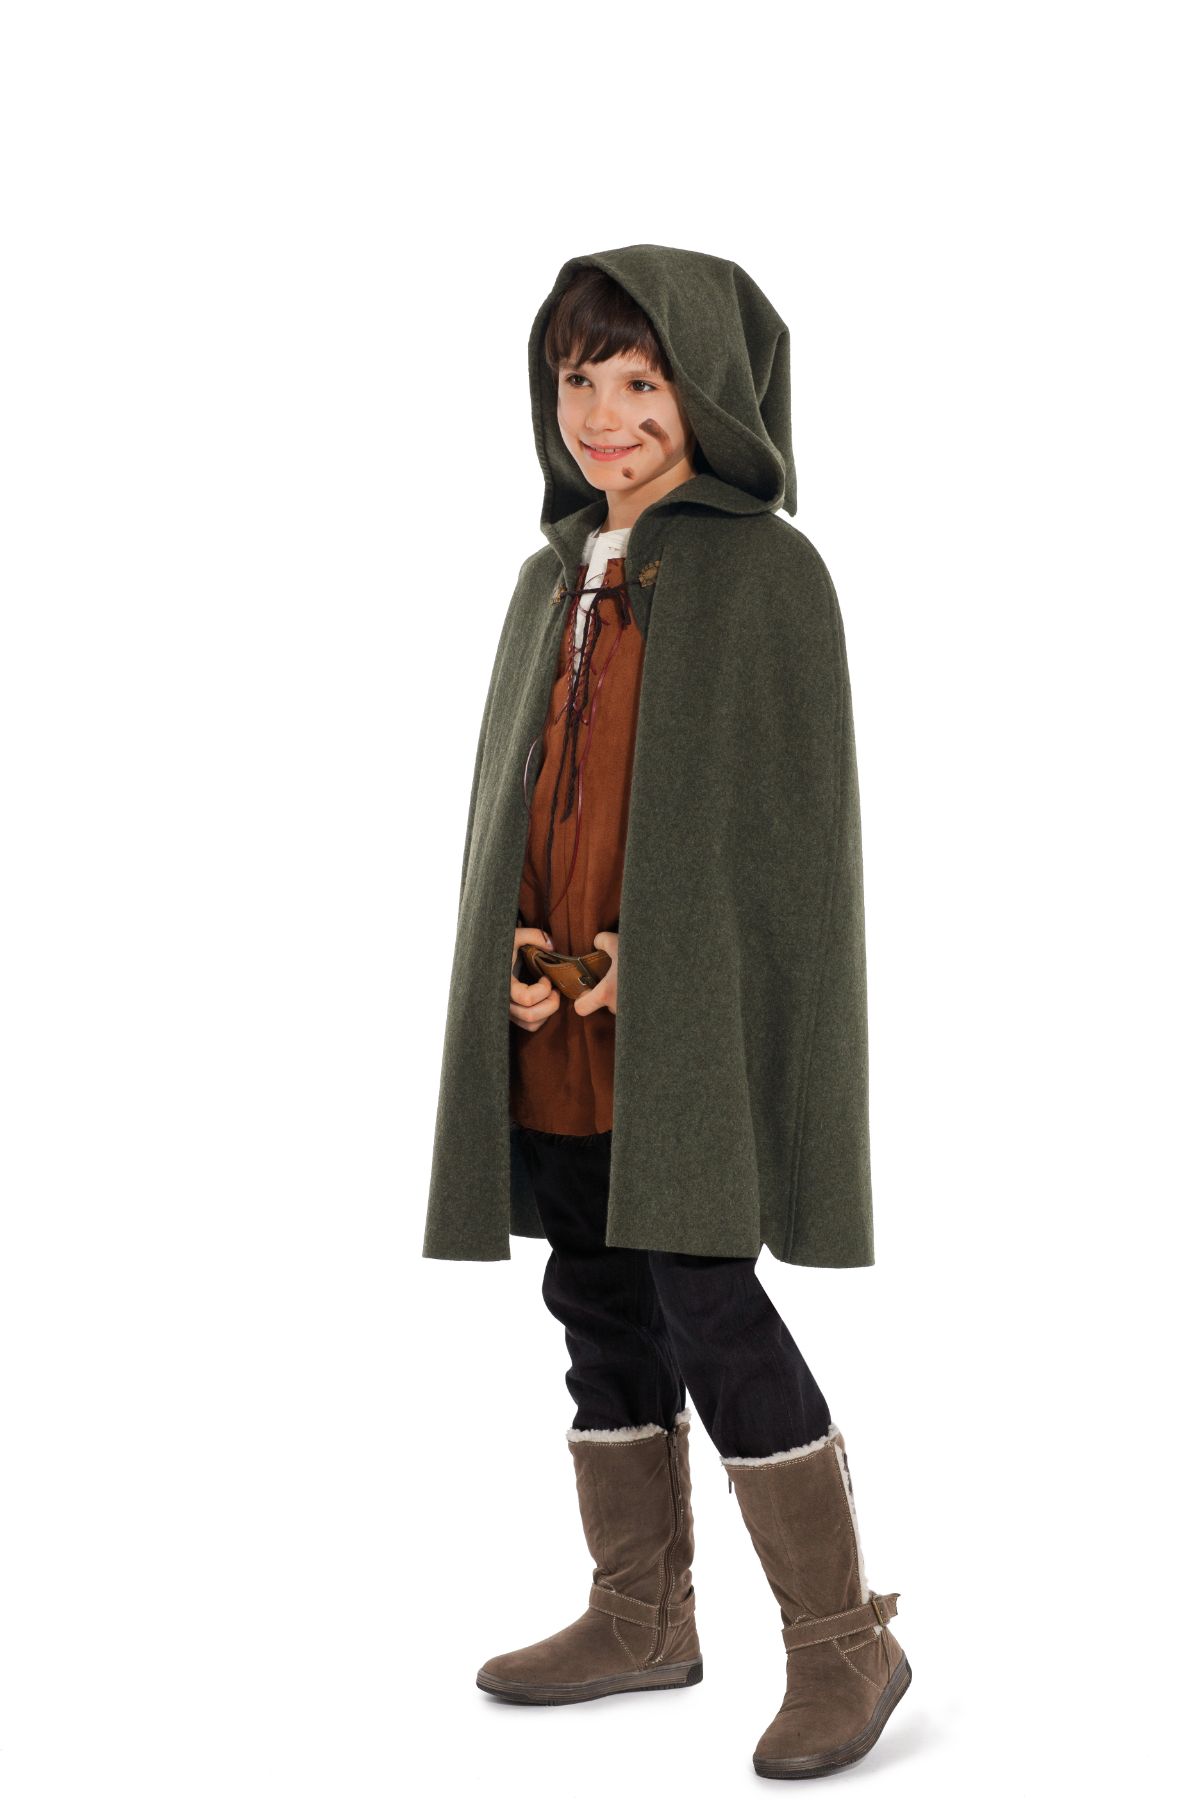 Burda Geel 9472 - Robin Hood kostuum